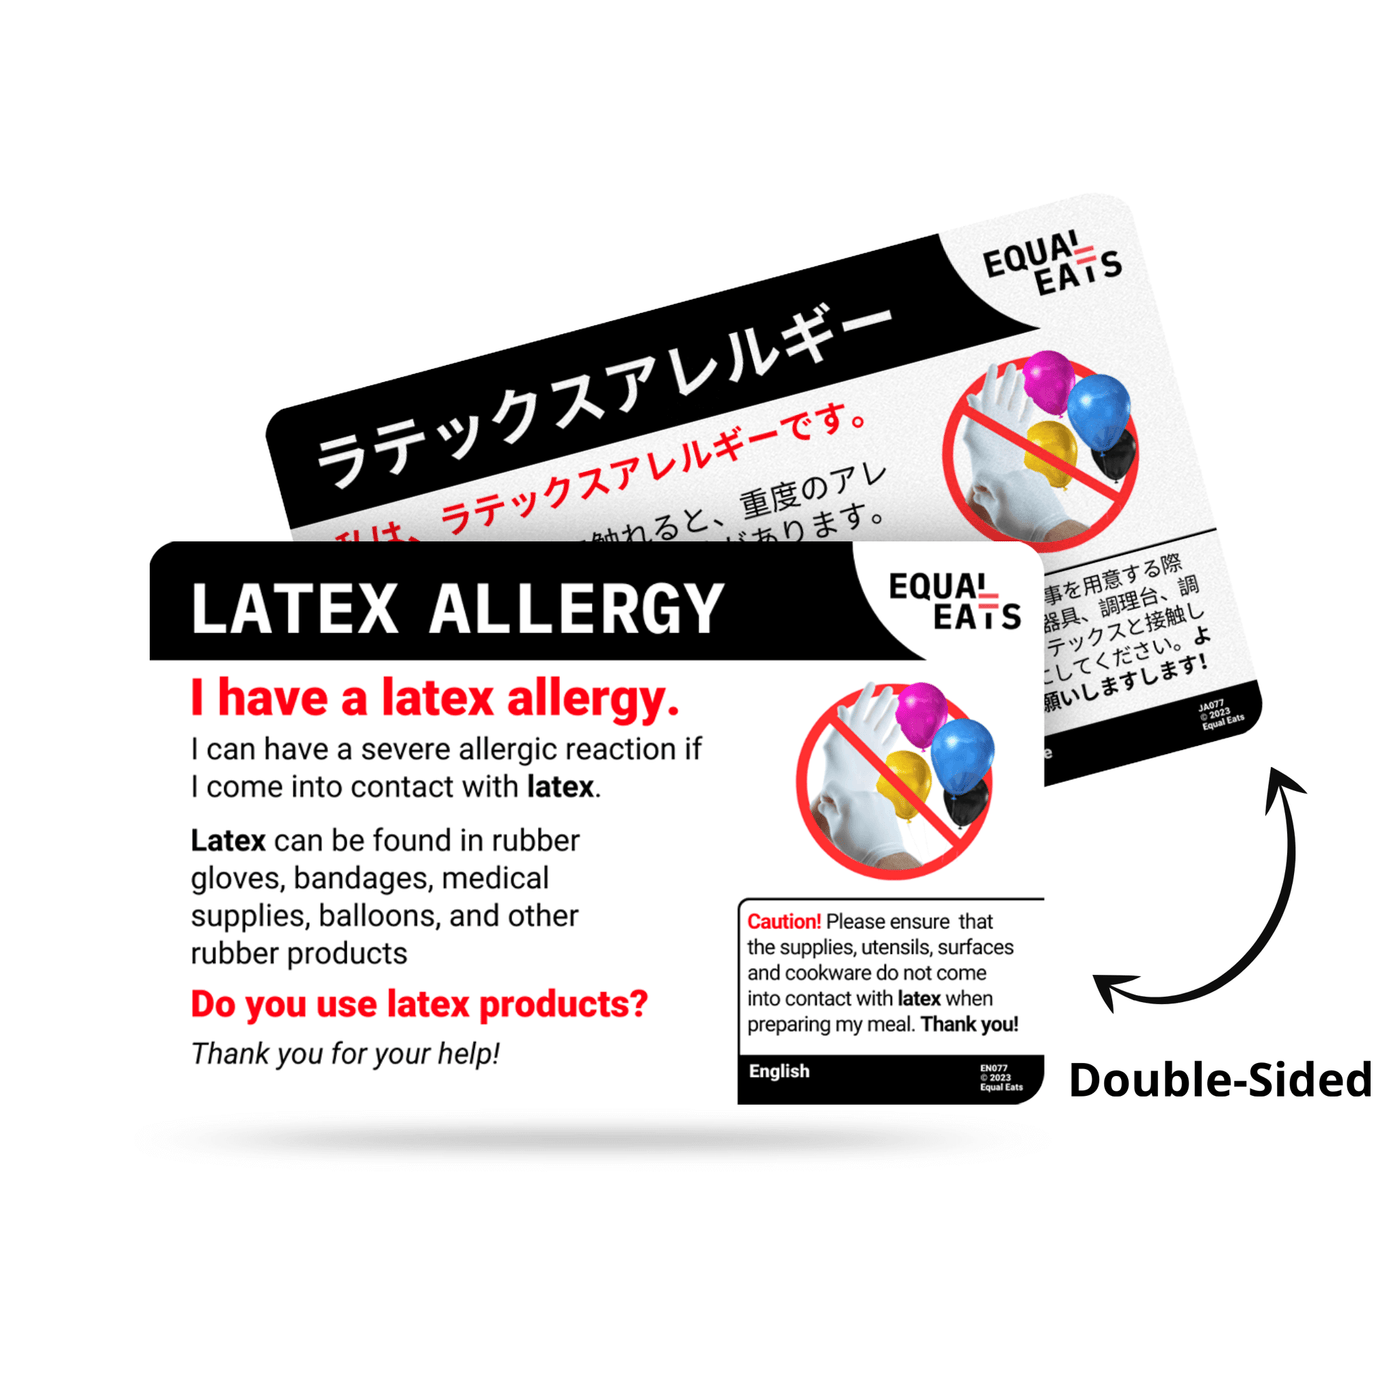 Lithuanian Latex Allergy Card